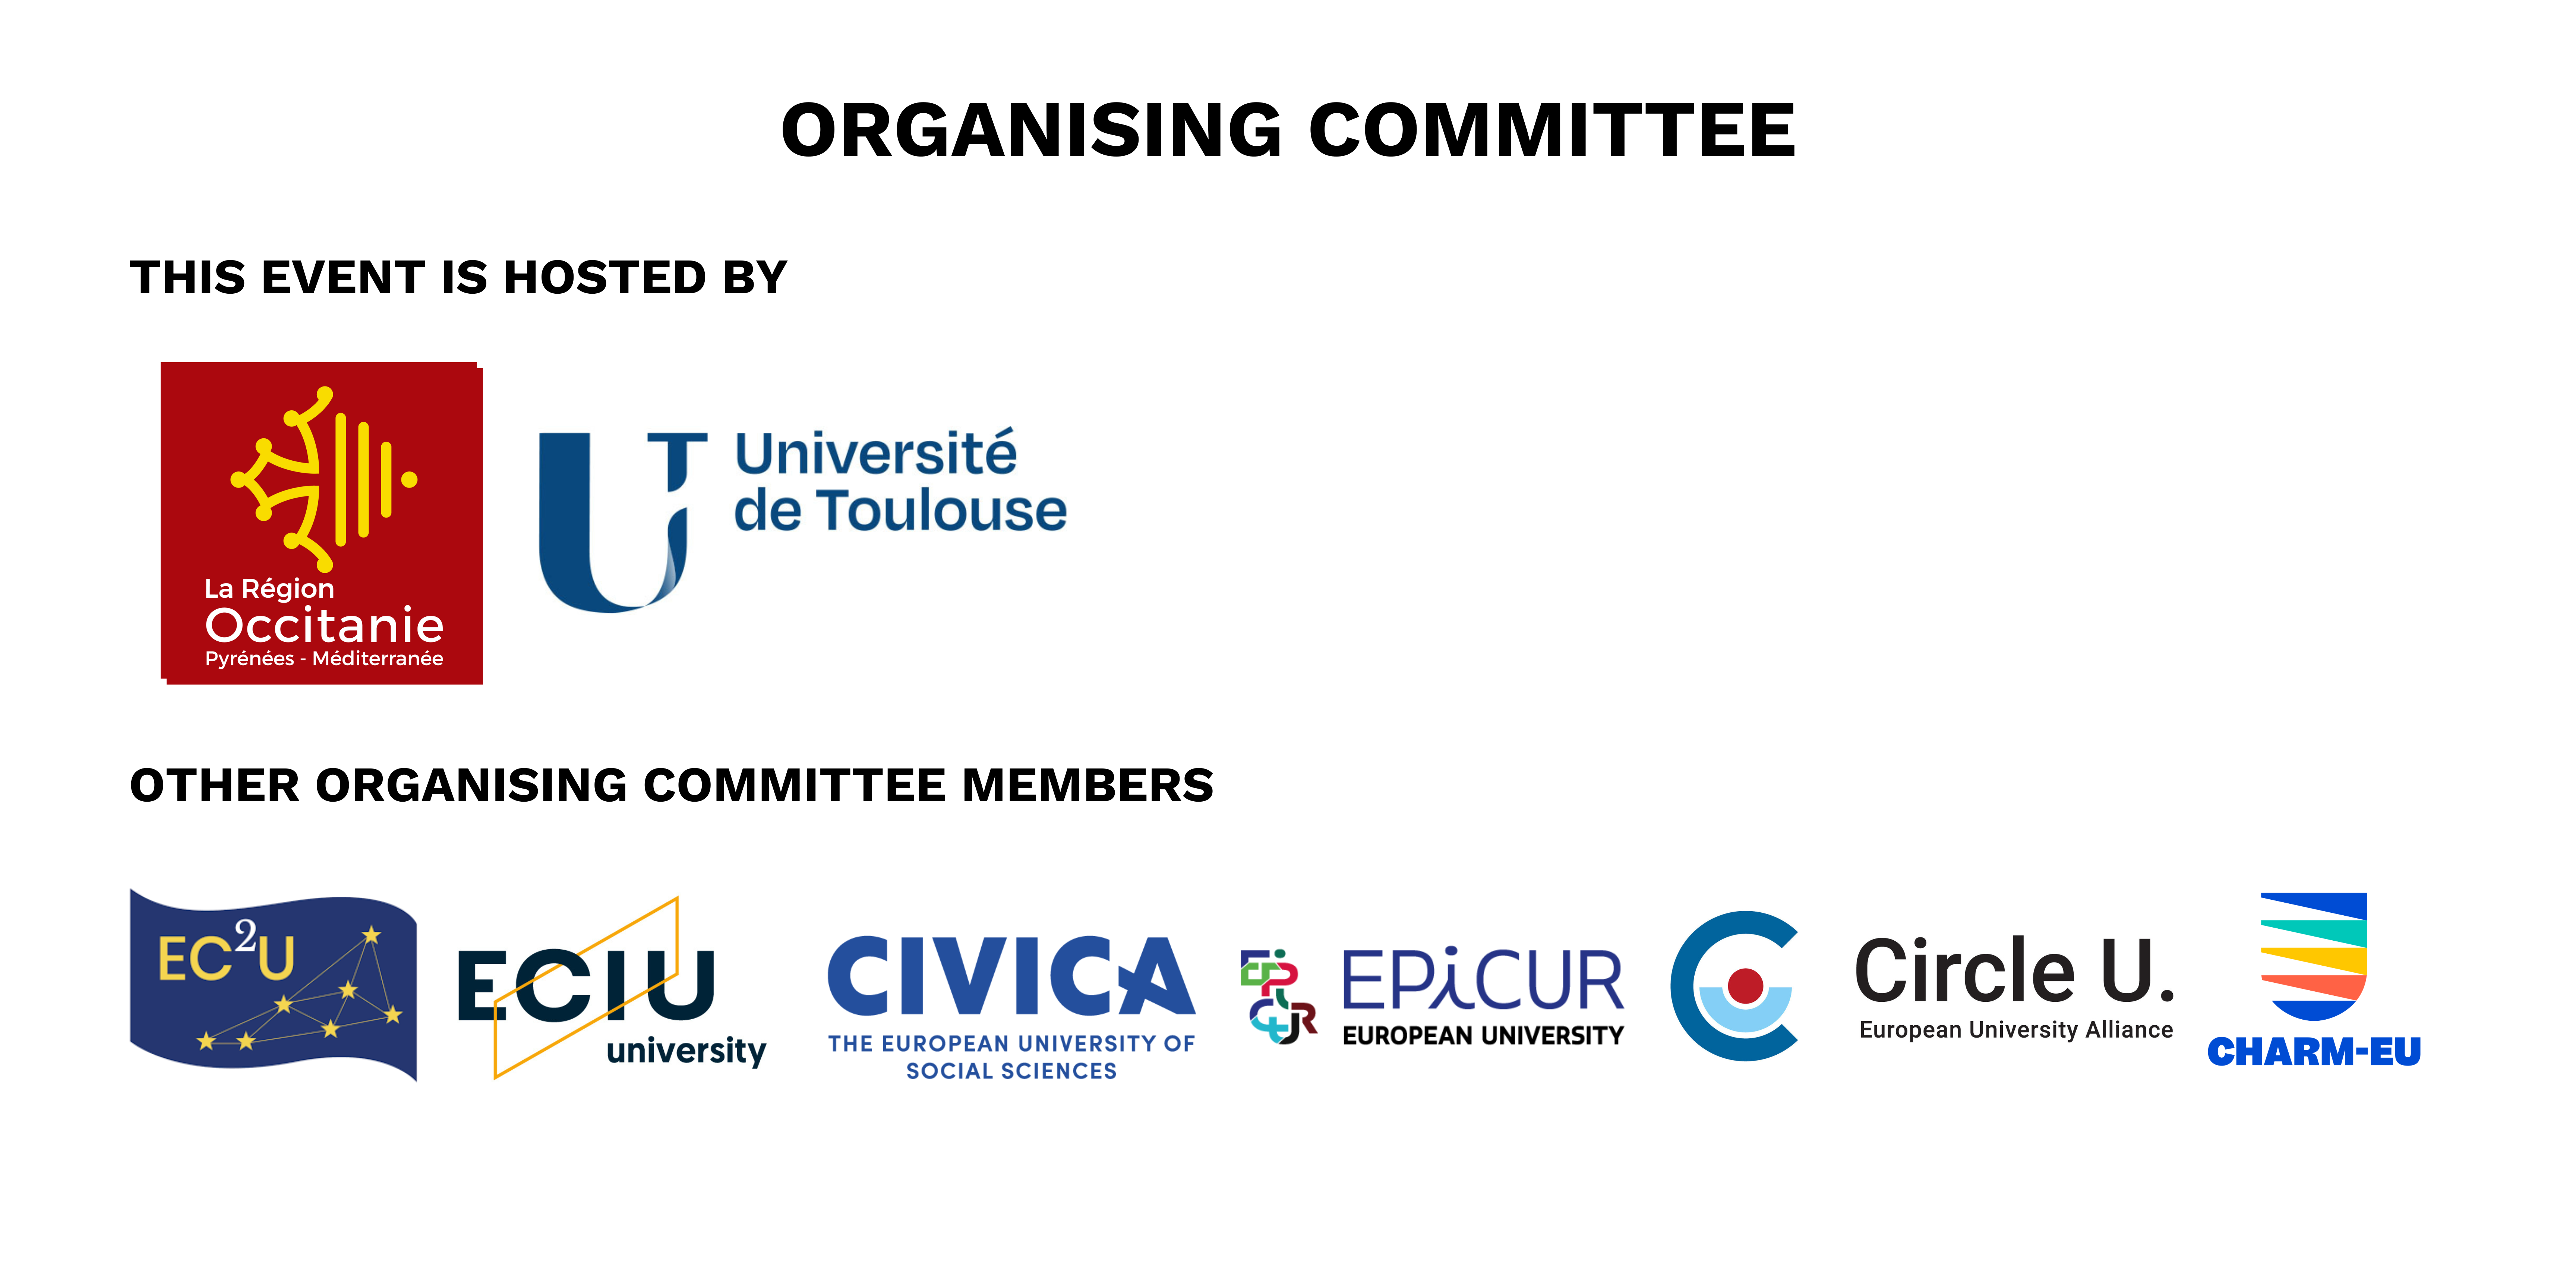 Organising committee: Hosts (Région occitanie and Université de Toulouse) and Other memebers (EC2U, ECIU, CIVICA, EPICUR, CircleU and CHARM-EU)